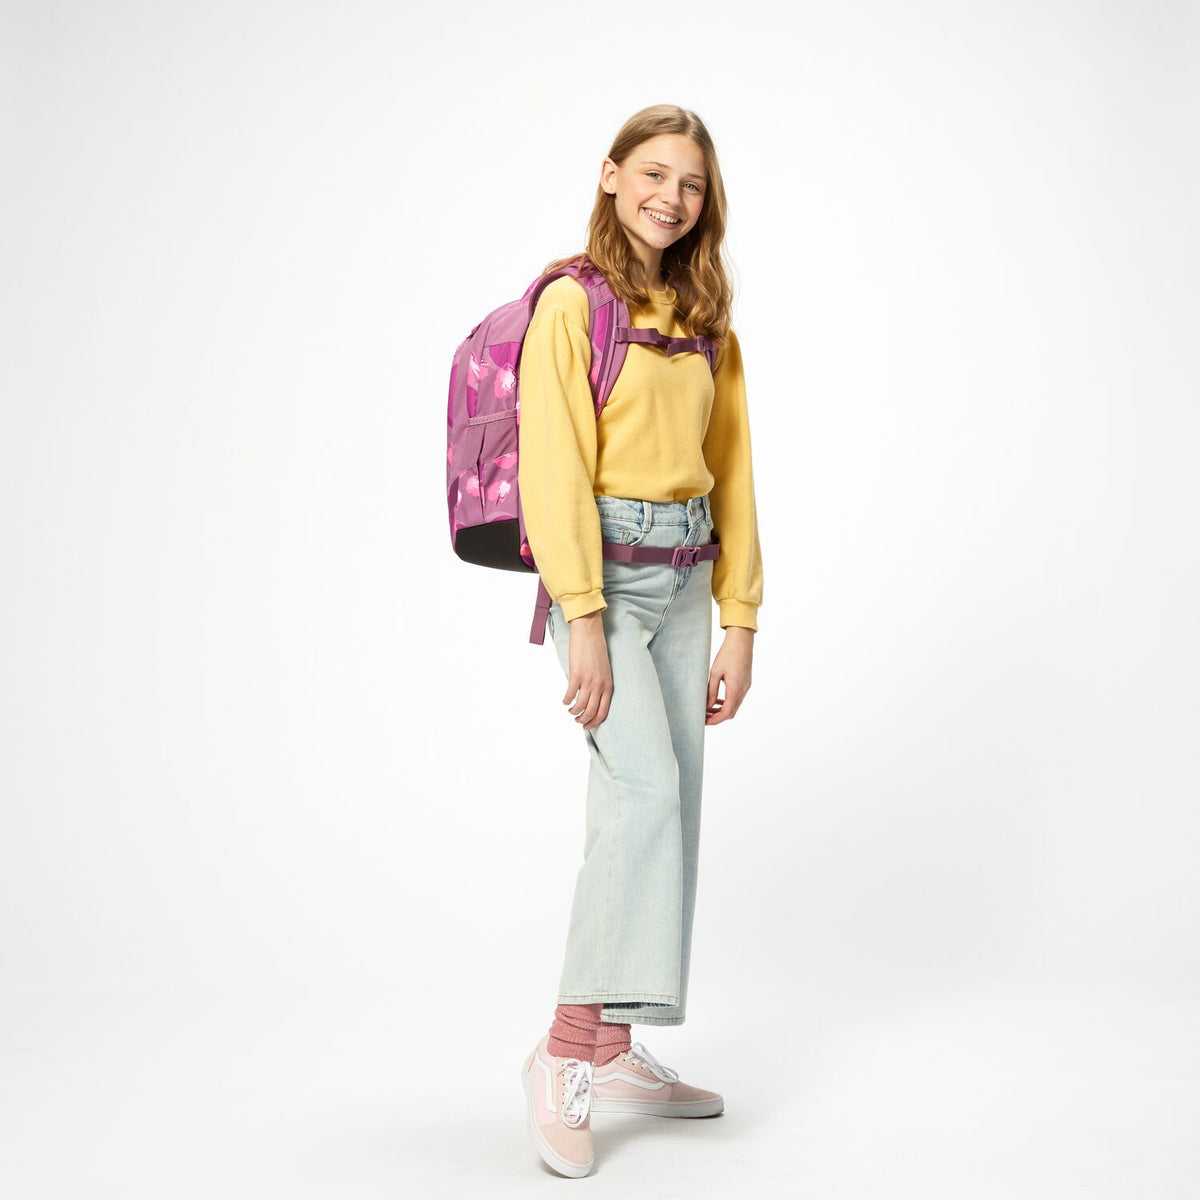 Satch Sleek Walking Clouds - school backpack for girls